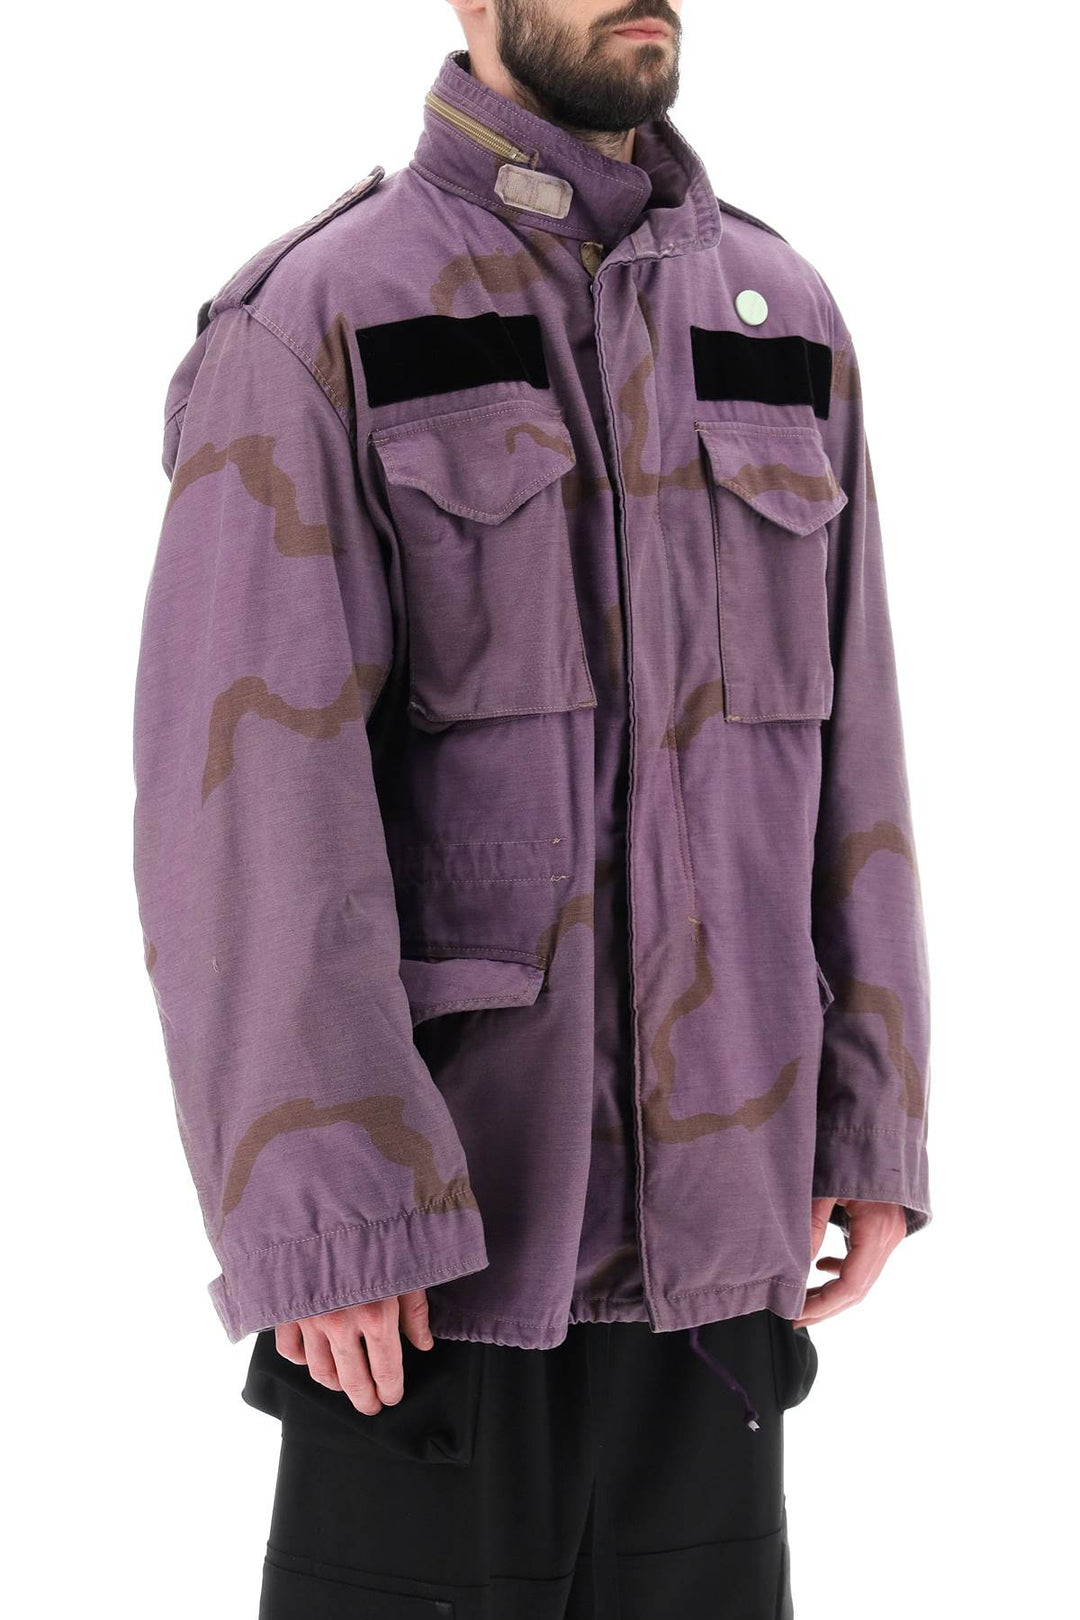 Oamc Field Jacket In Cotton With Camouflage Pattern   Purple